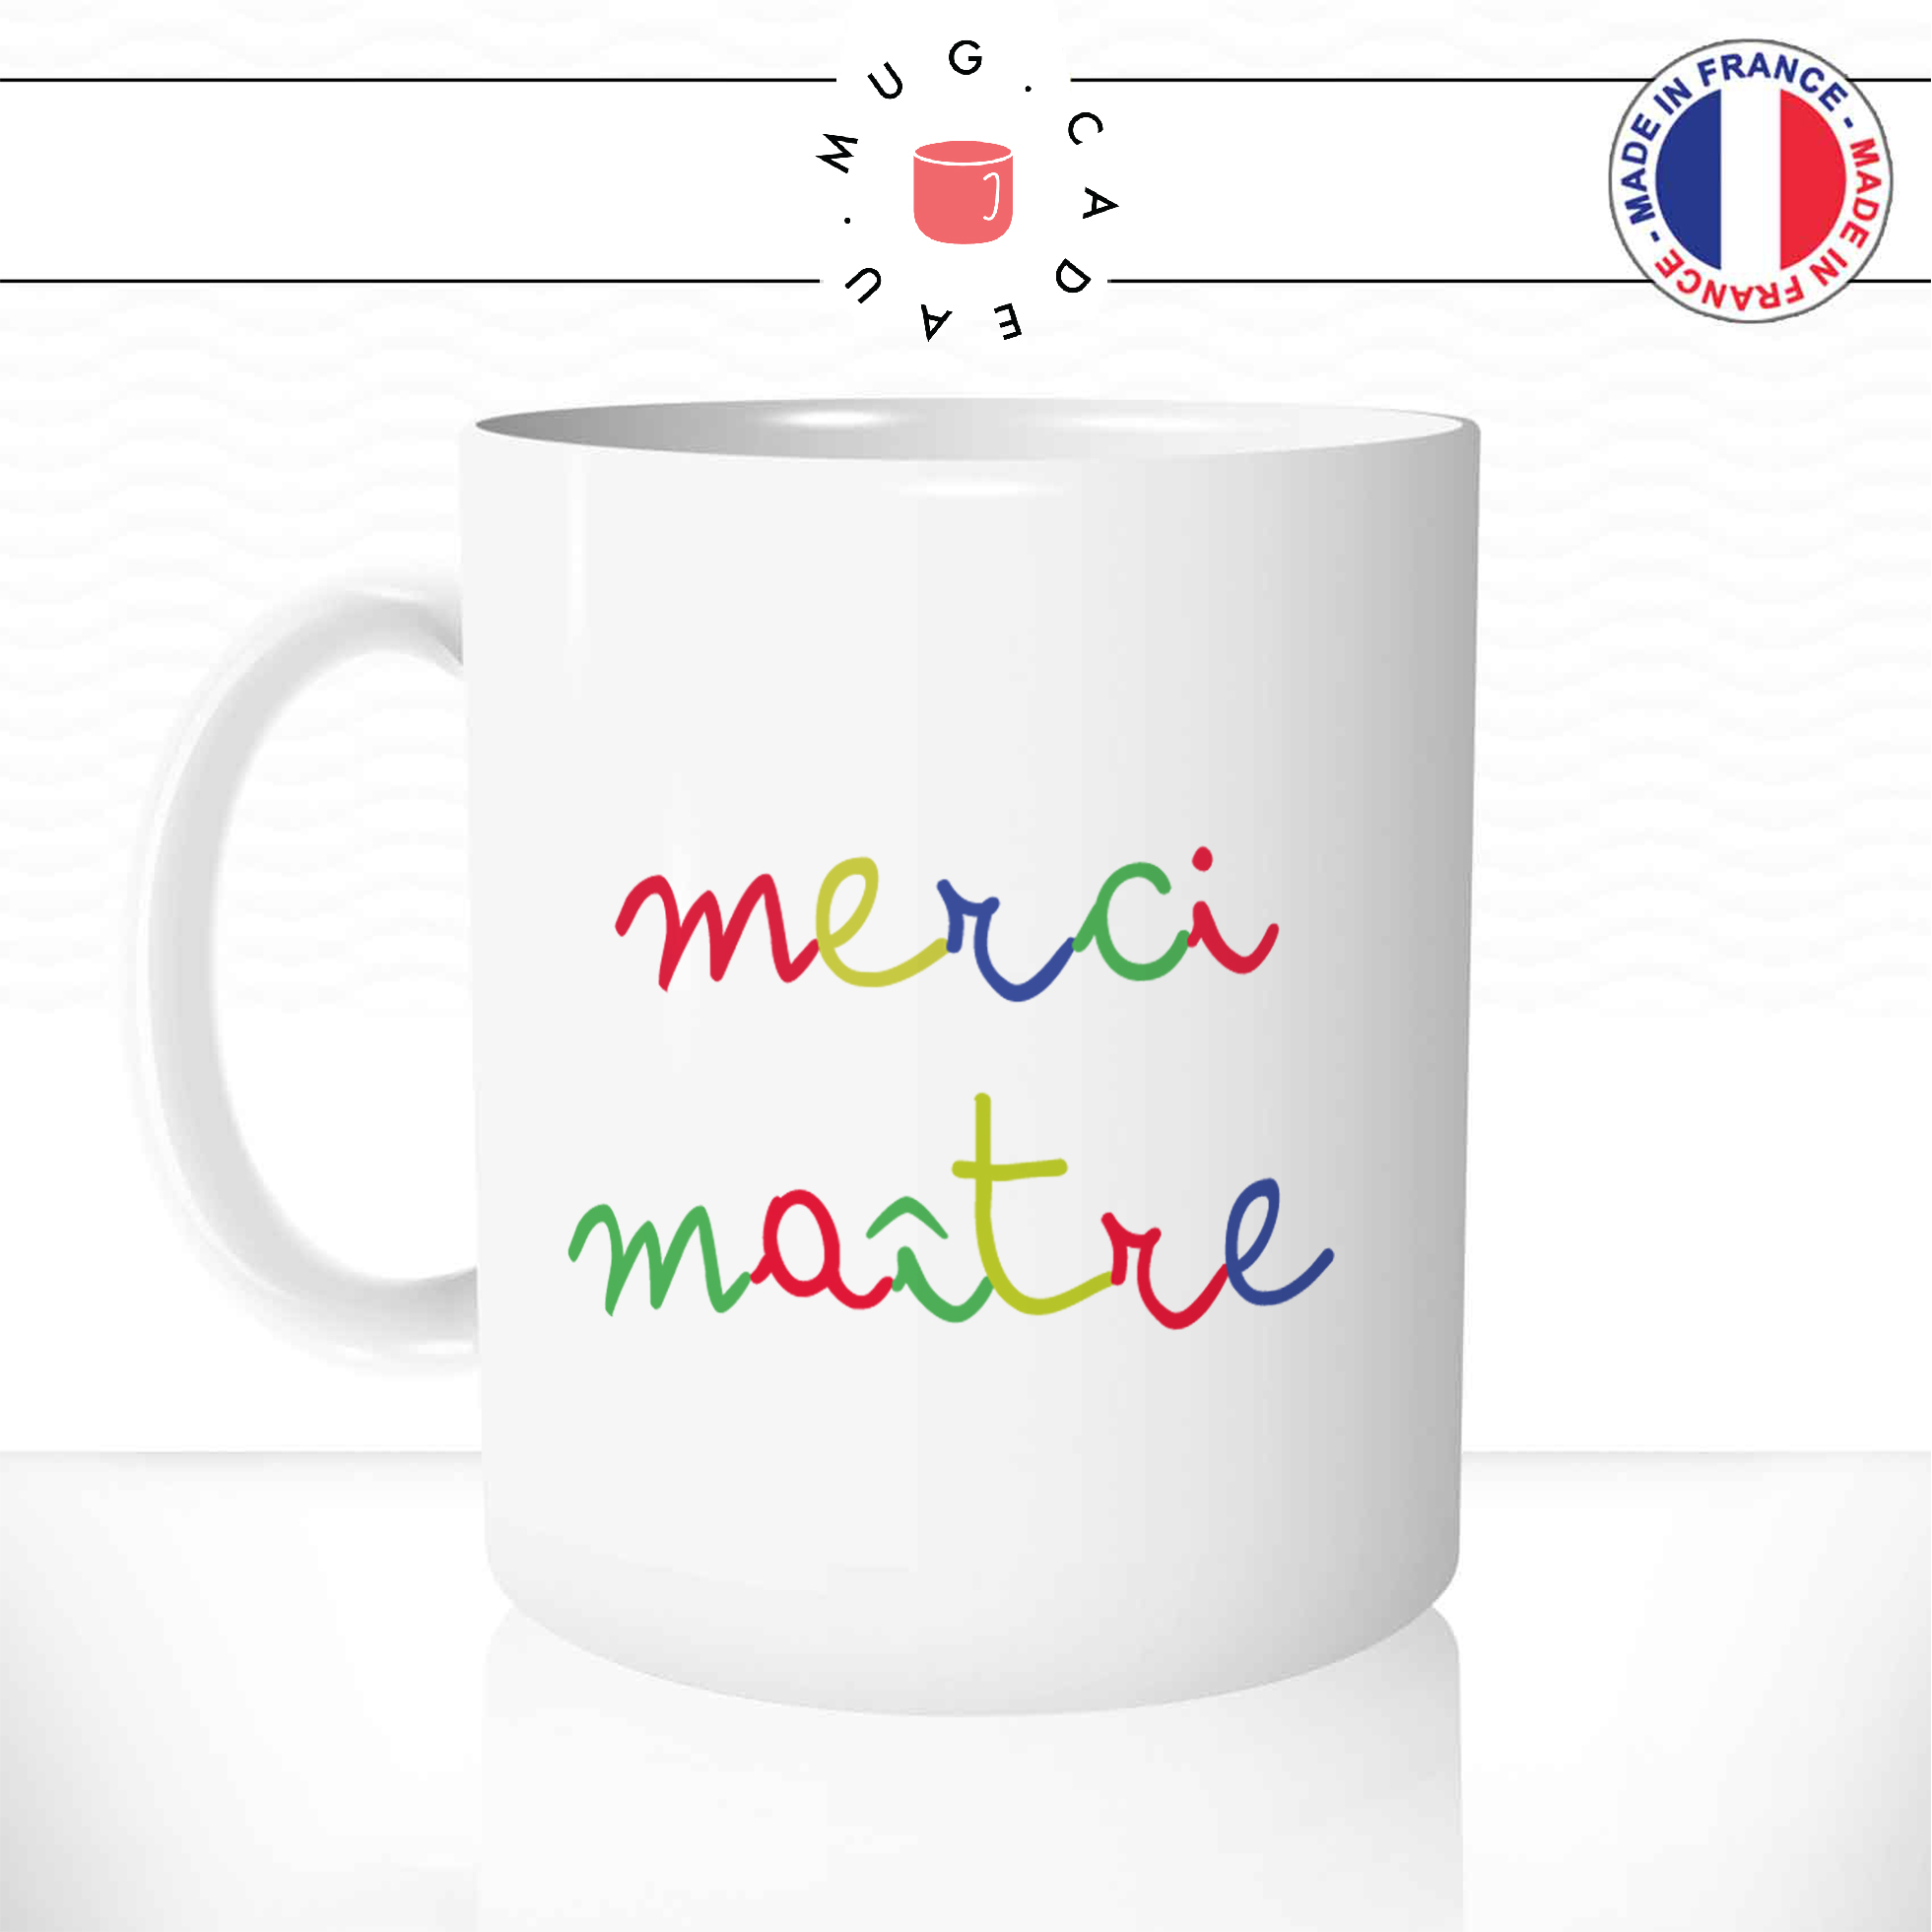 mug-tasse-ref3-fin-annee-scolaire-merci-maitre-couleurs-cafe-the-mugs-tasses-personnalise-anse-gauche